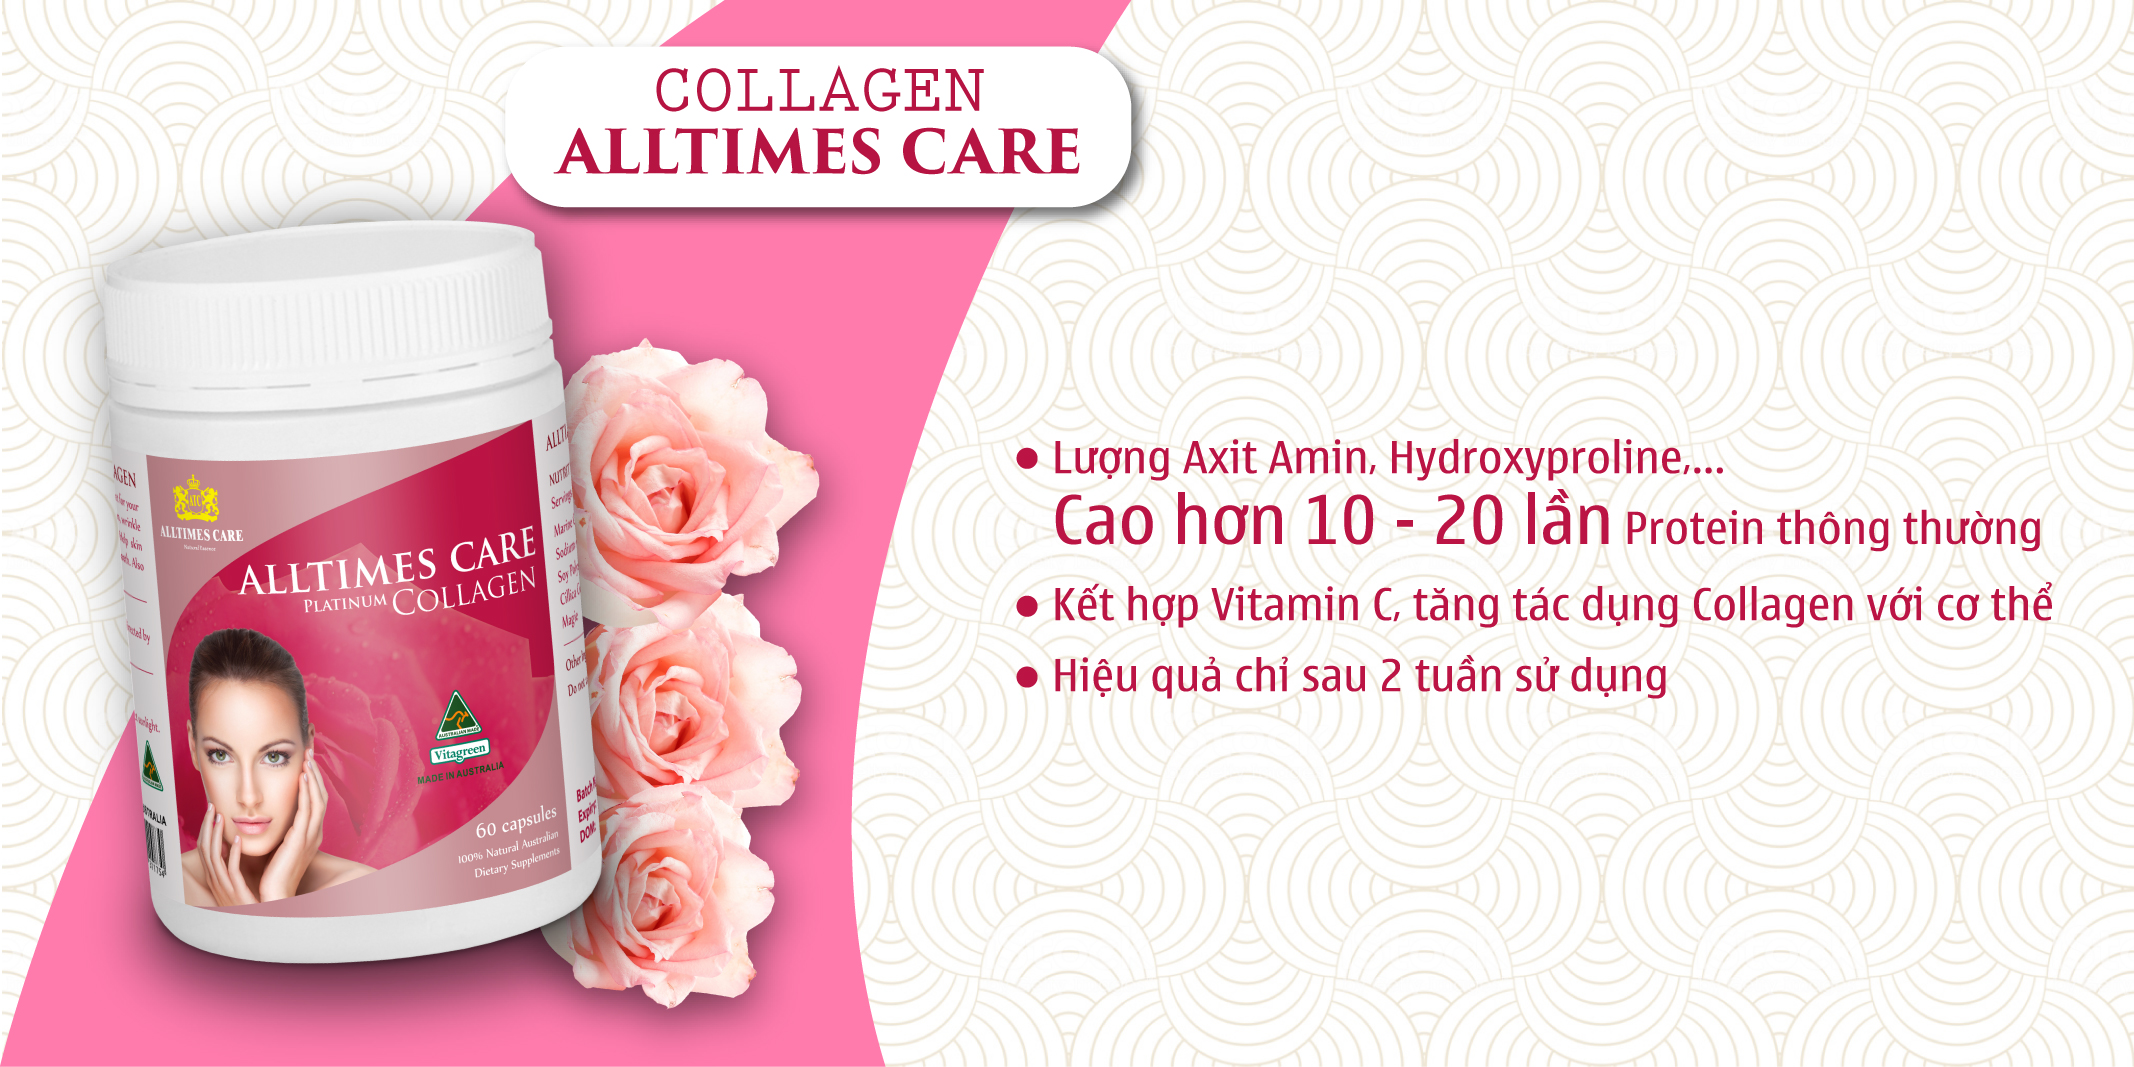 Collagen Alltimes Care